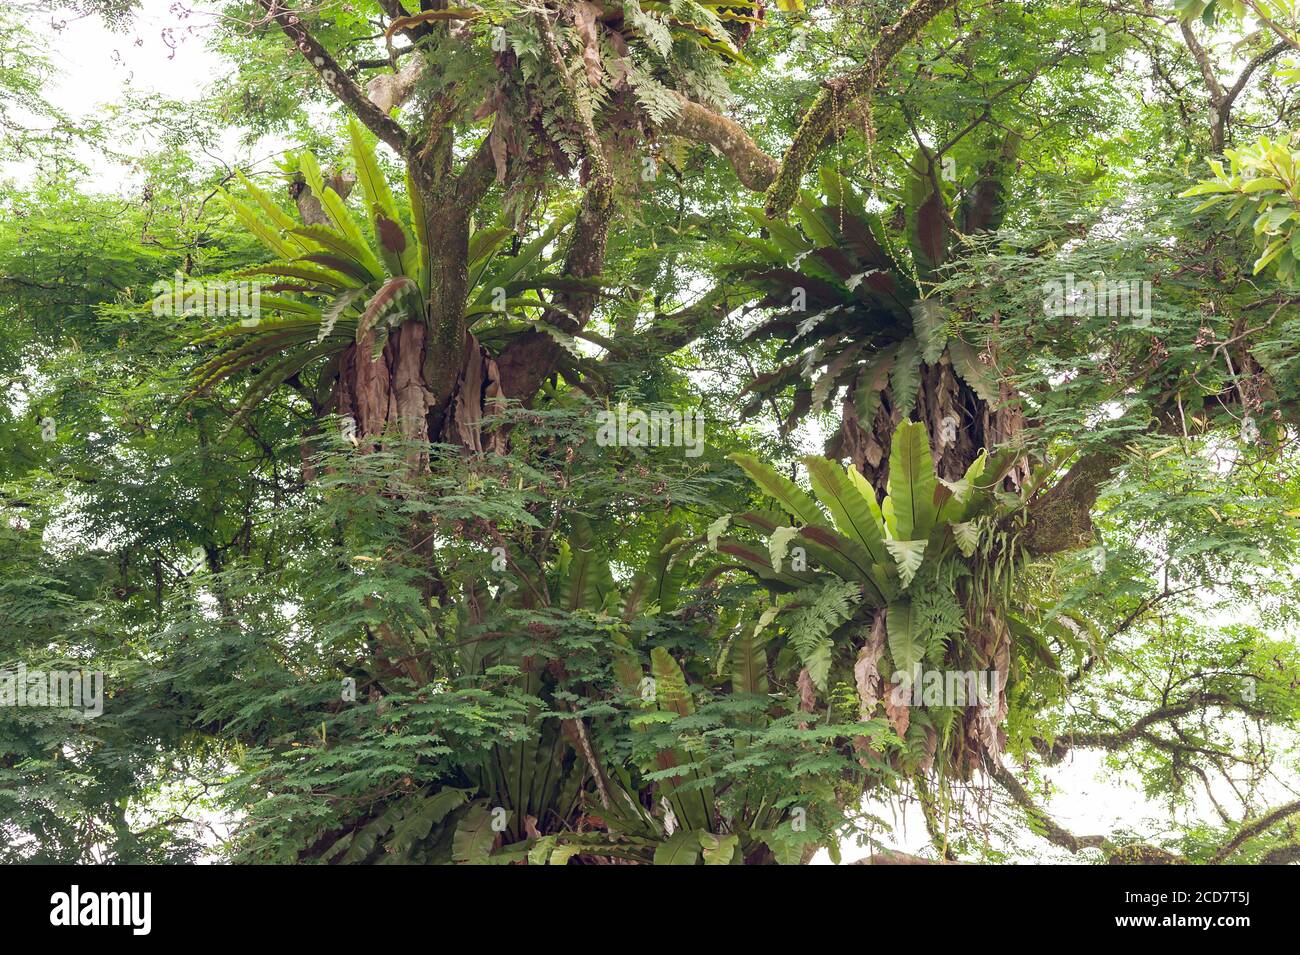 ASPLENIUM GROWING IN A TREE CANOPY Stock Photo